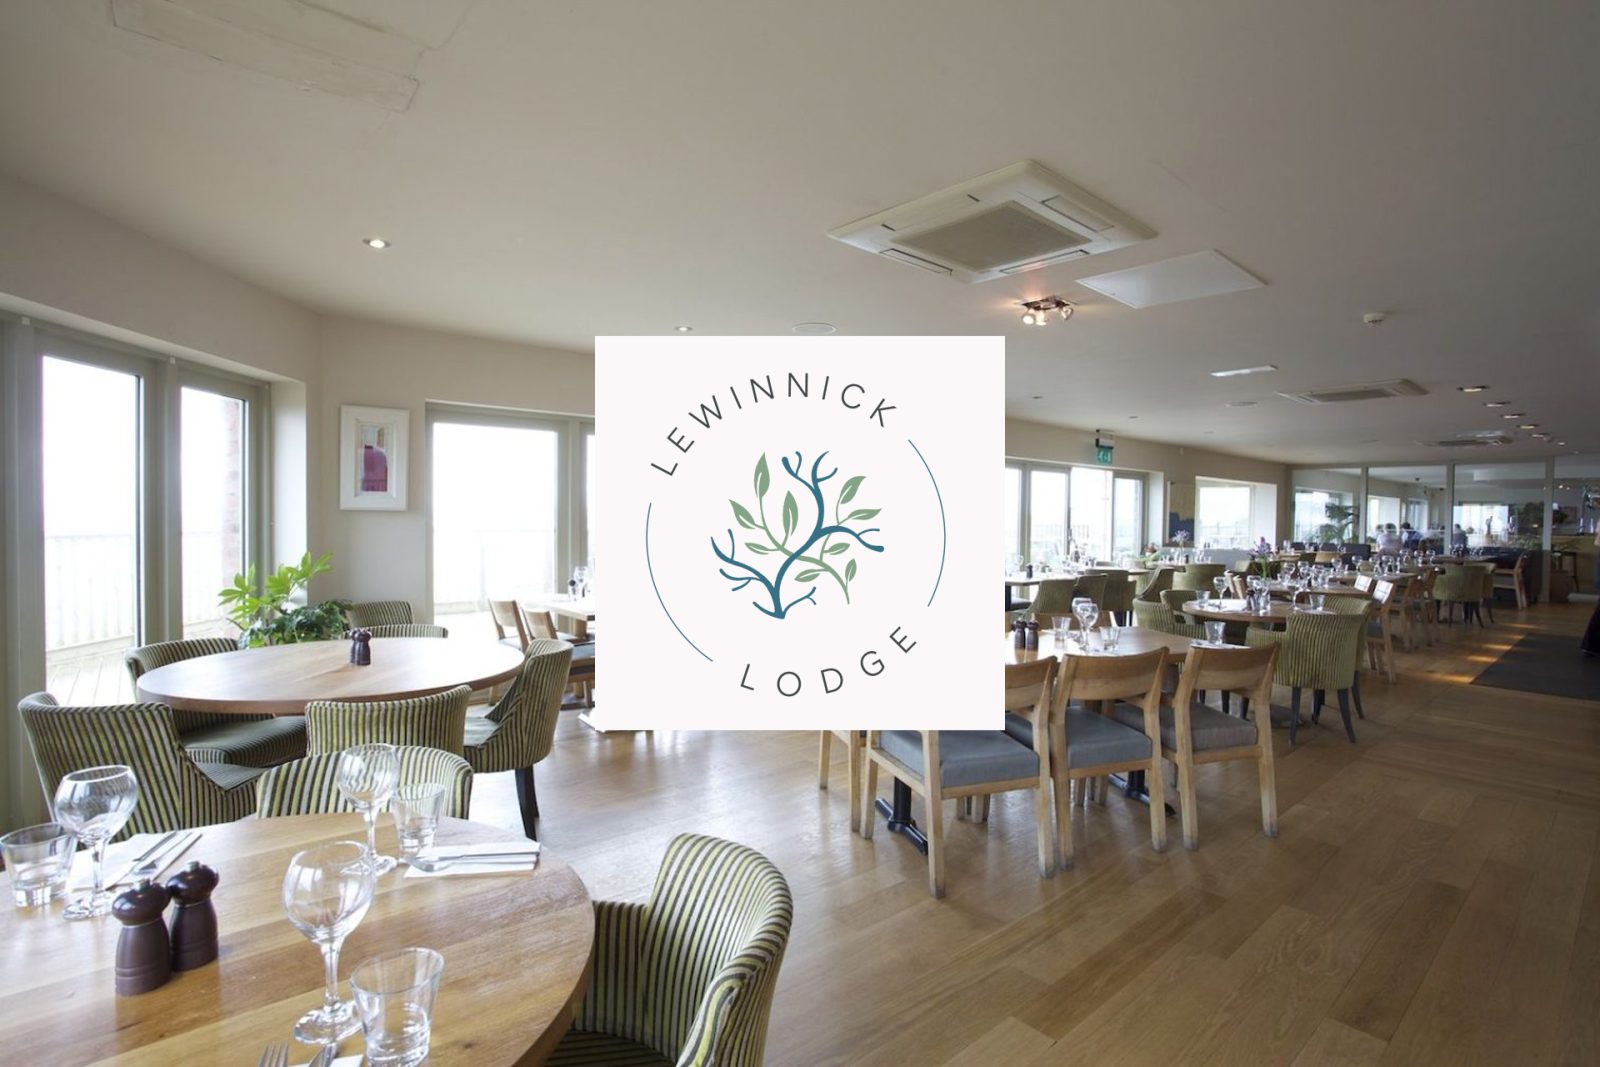 lewinnick-lodge-restaurant_newquay-clubbing